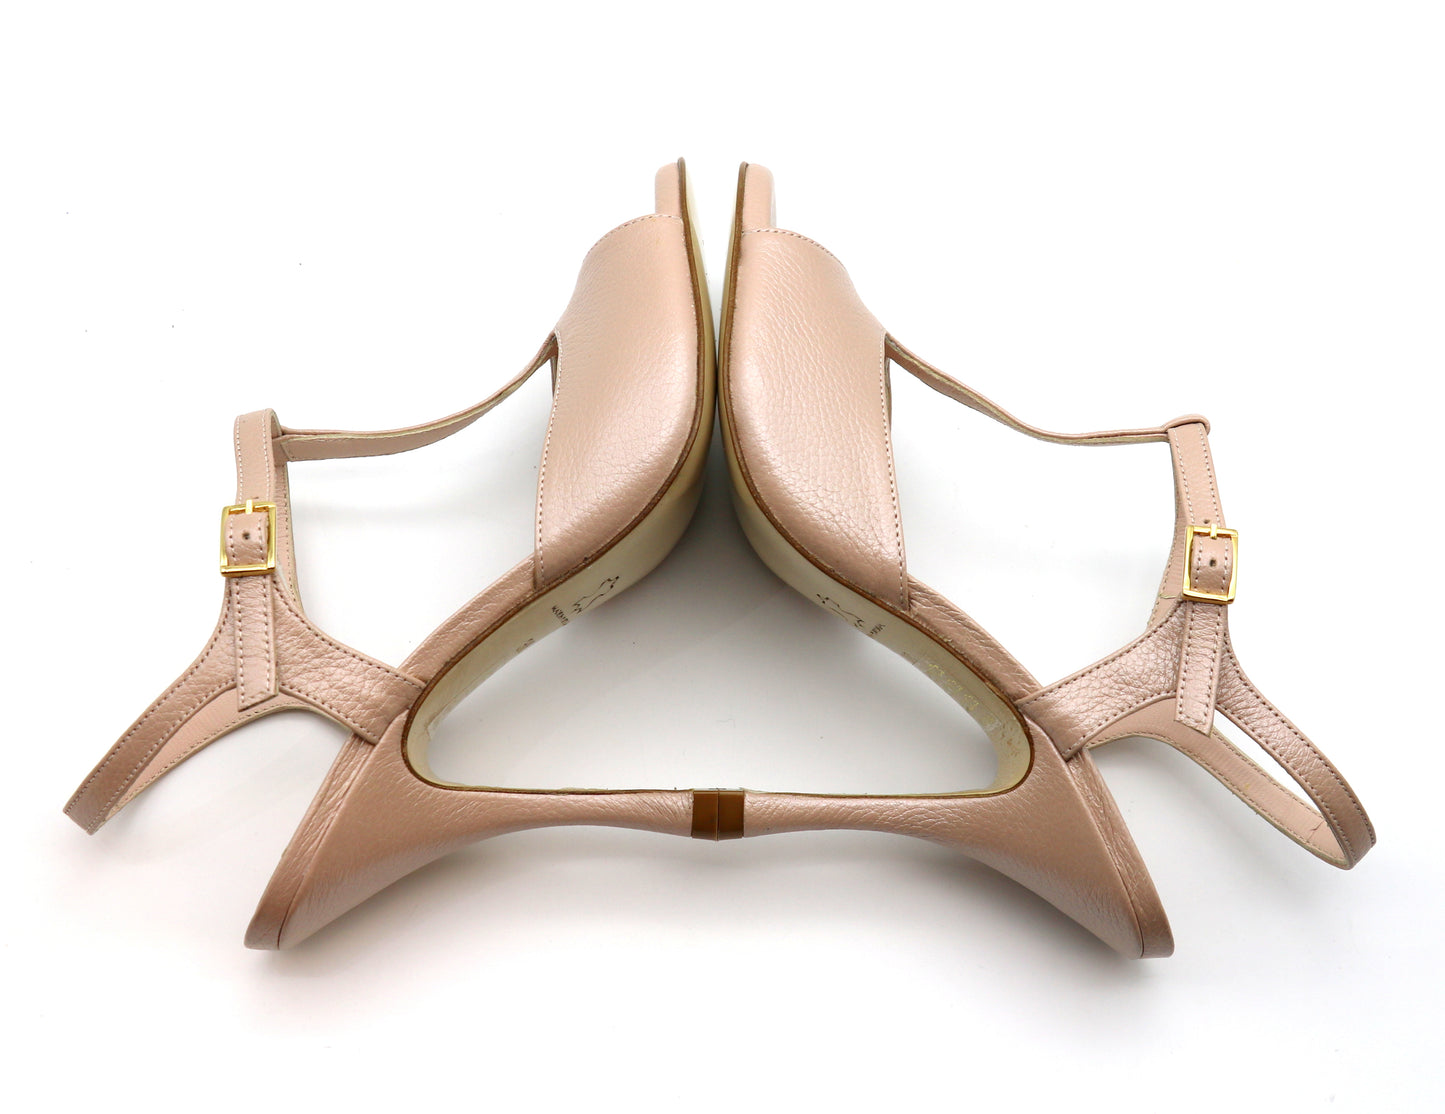 Sencillo pearly nude leather heels 9cm